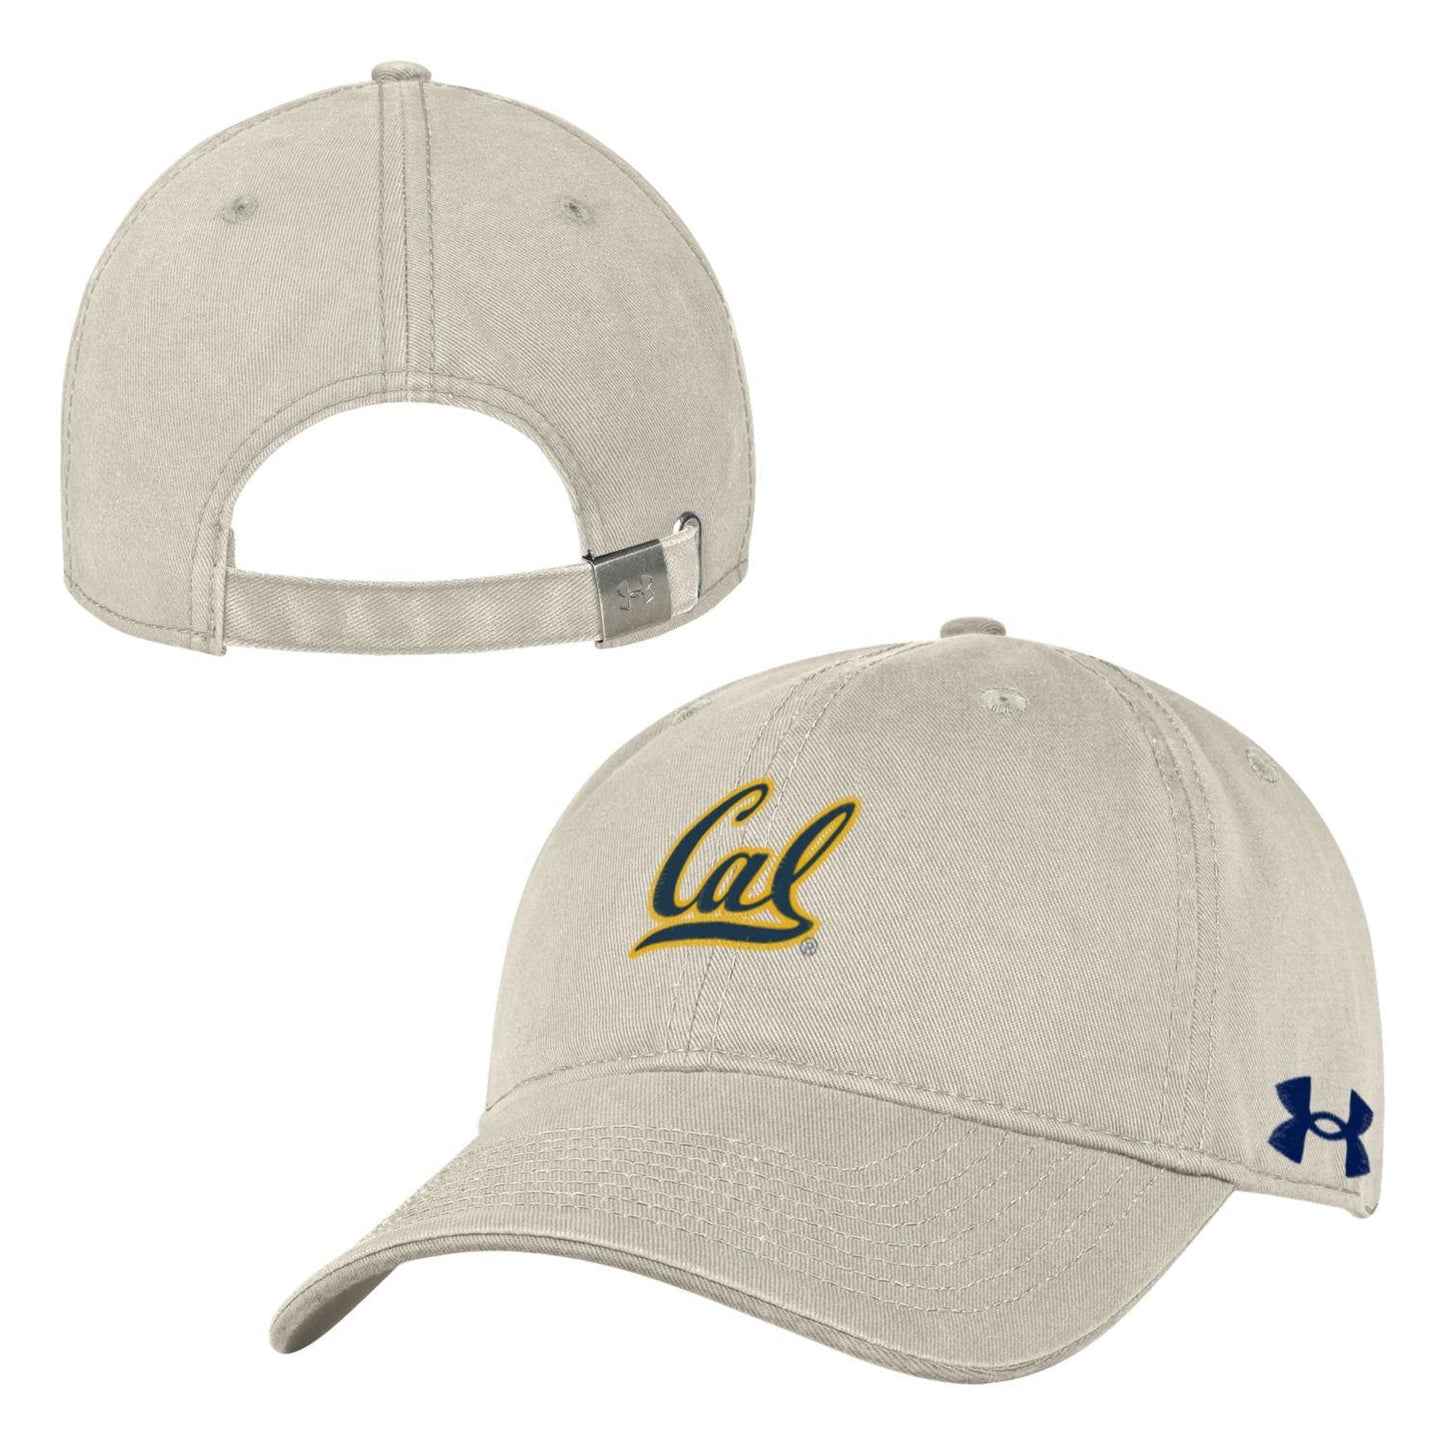 U.C. Berkeley 2" Cal embroidered Under Armour performance cotton hat-Khaki-Shop College Wear